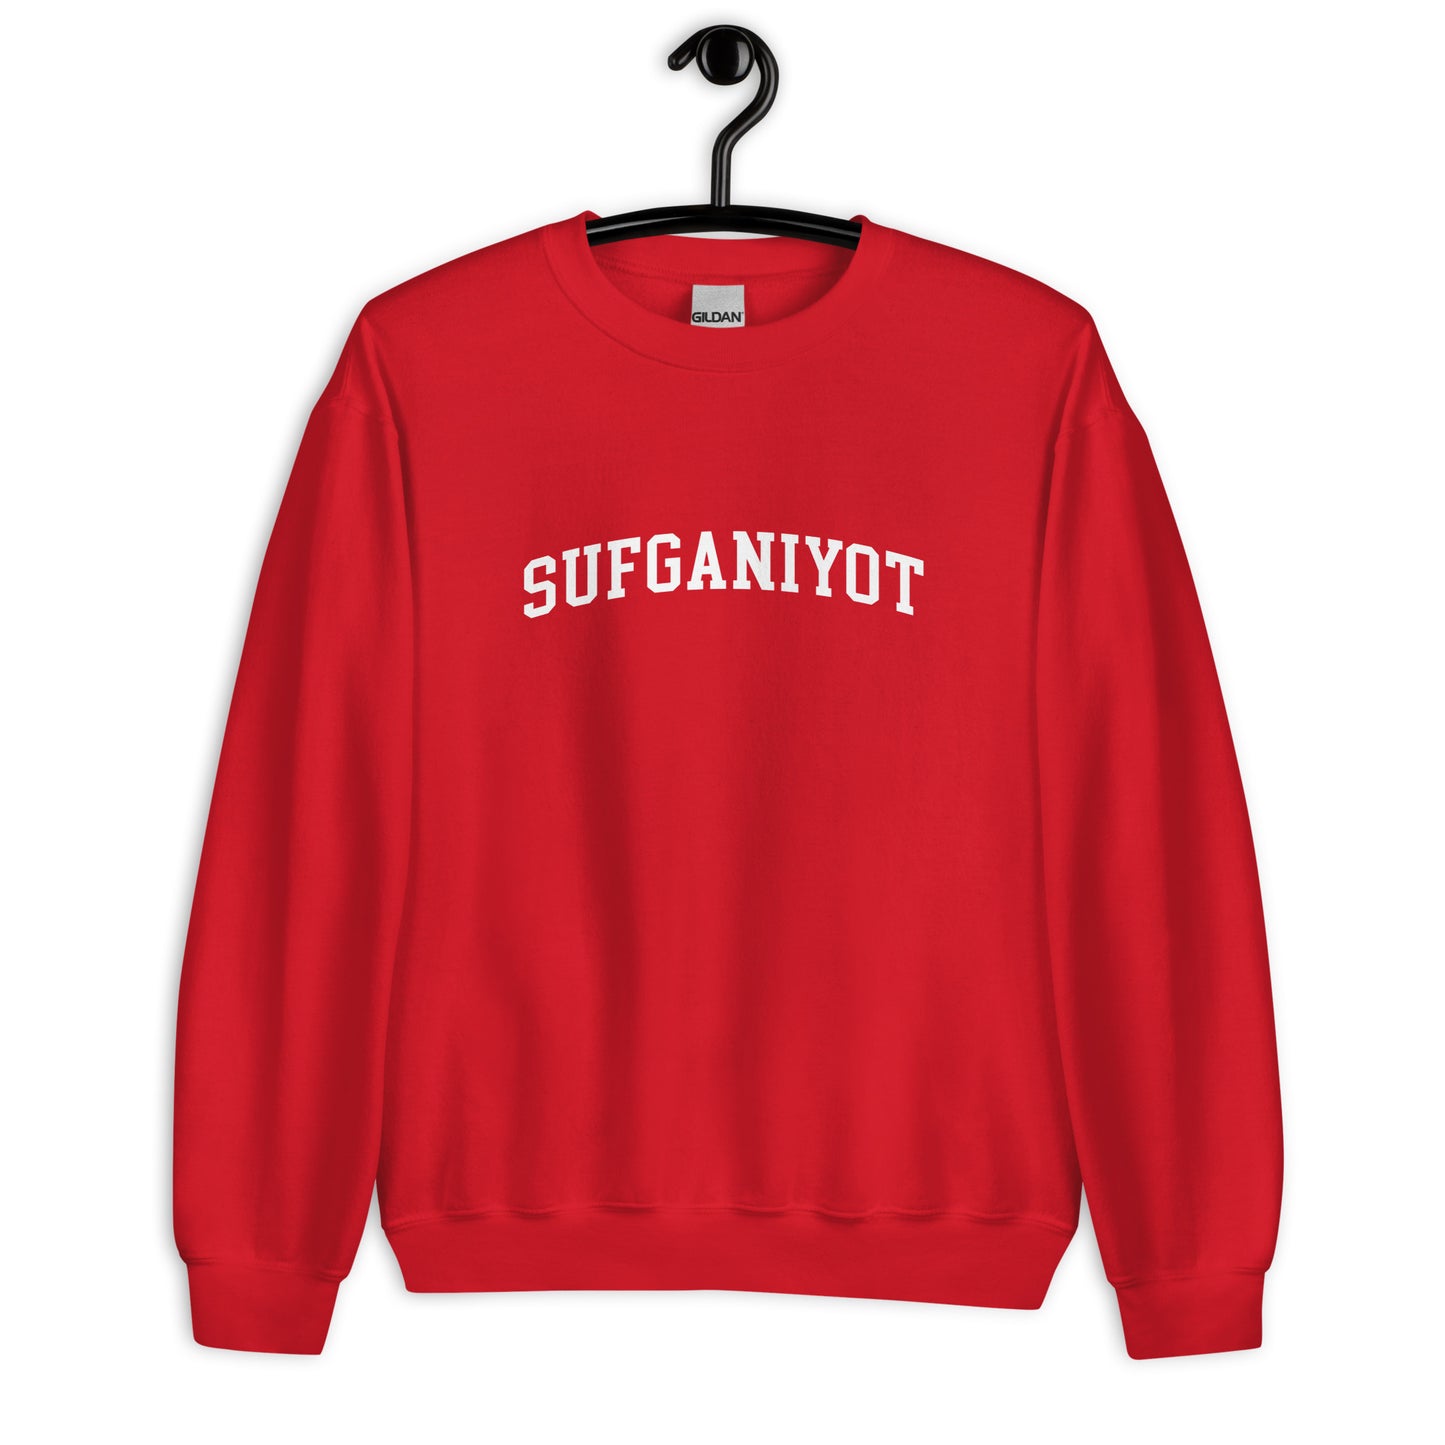 Sufganiyot Sweatshirt - Arched Font